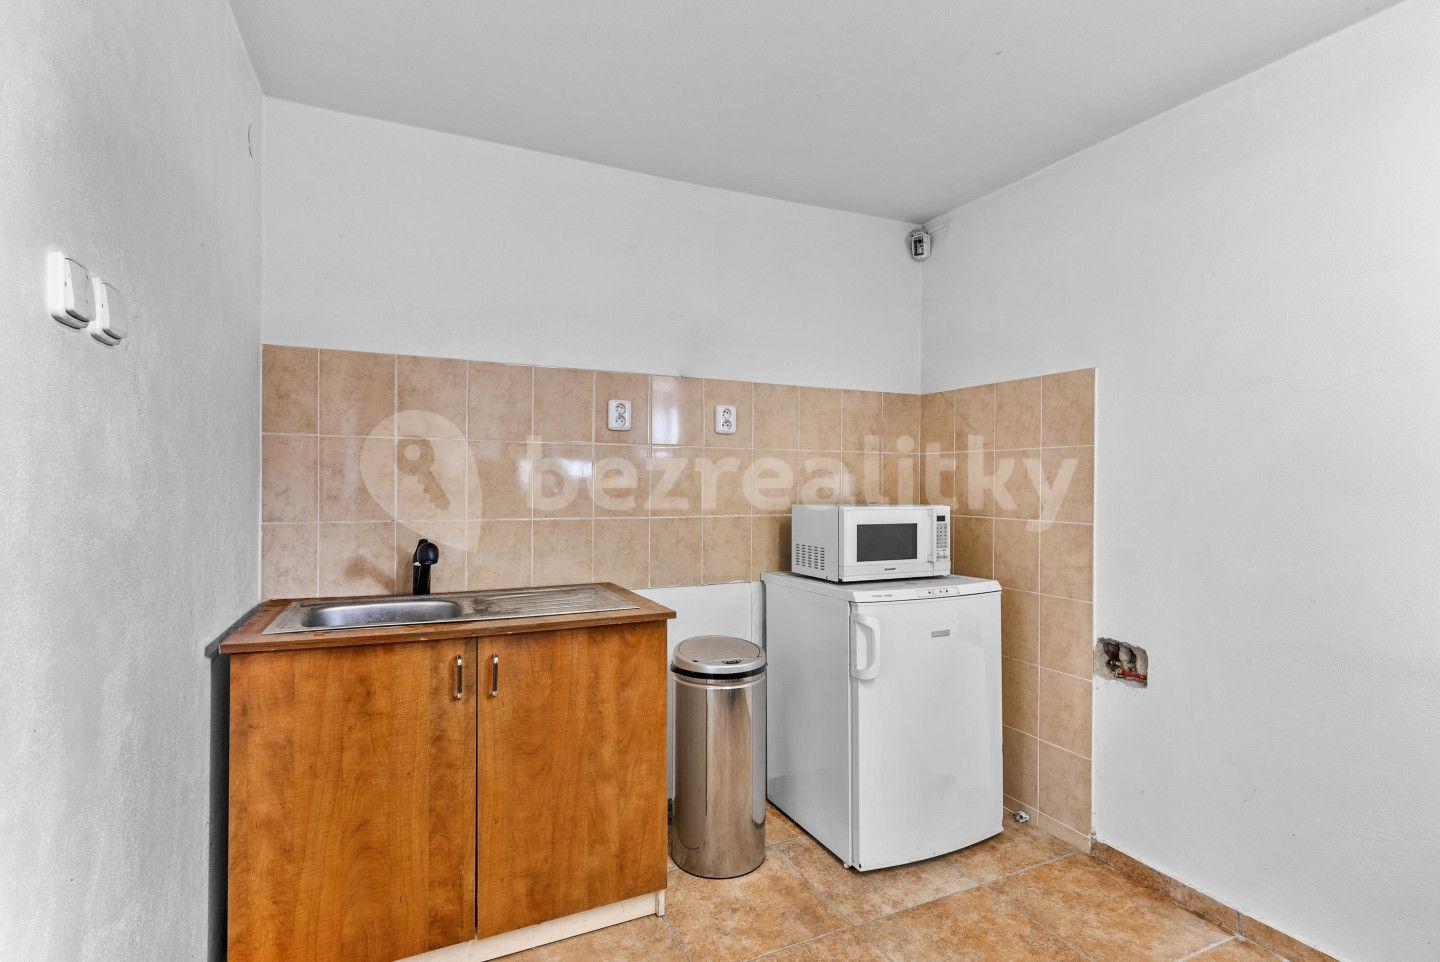 Predaj nebytového priestoru 4.179 m², Bystřice, Středočeský kraj